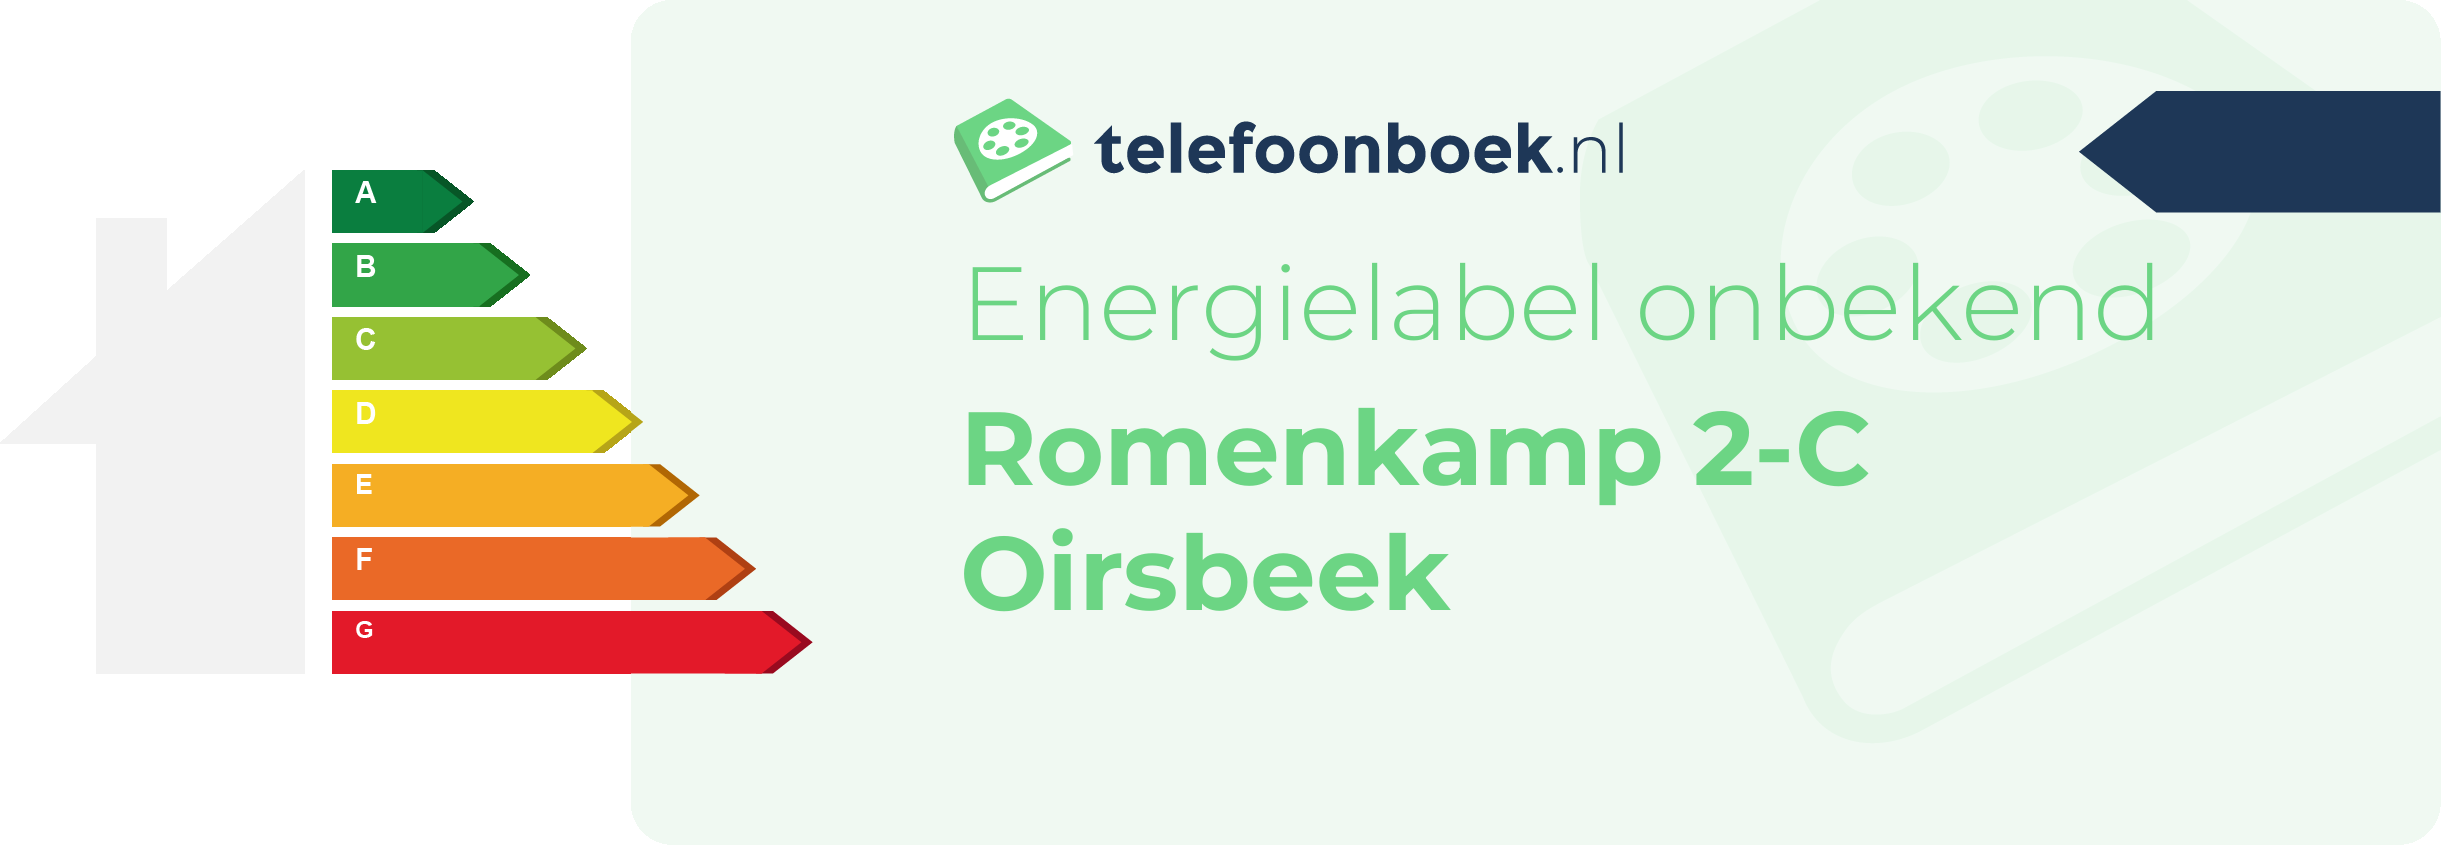 Energielabel Romenkamp 2-C Oirsbeek